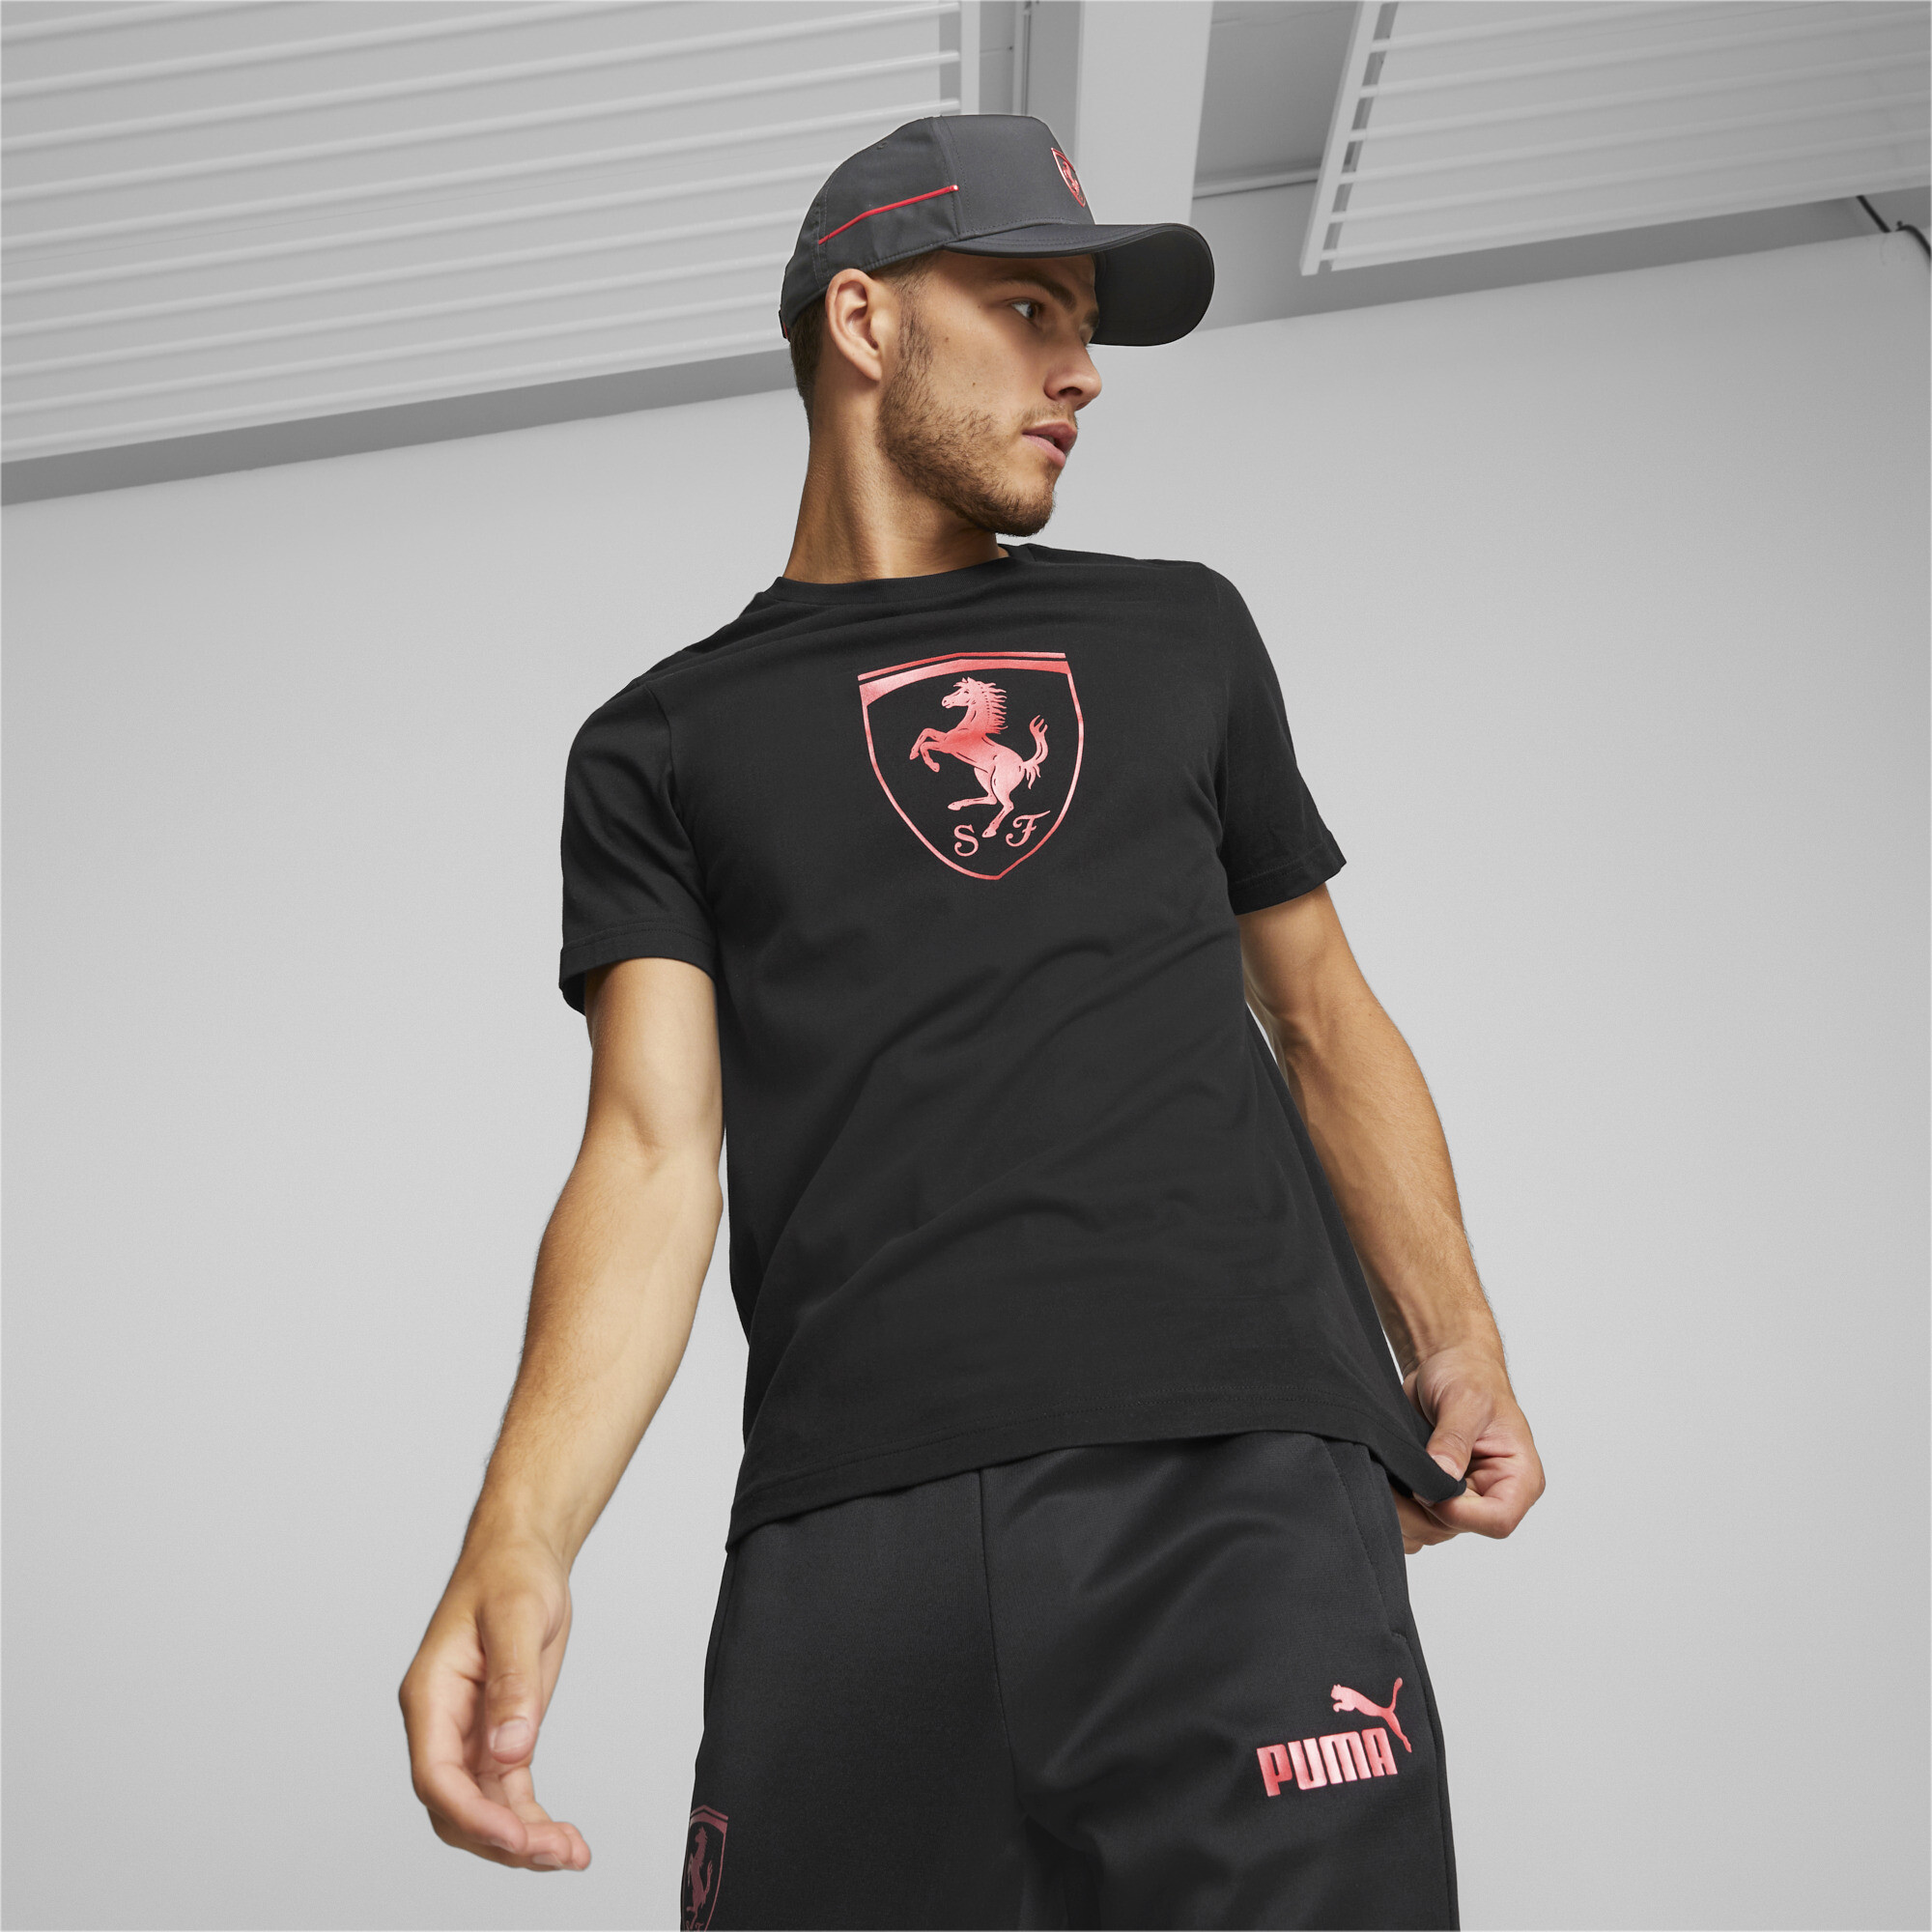 Puma T-shirt MEN FASHION Shirts & T-shirts Sports Black L discount 77% 